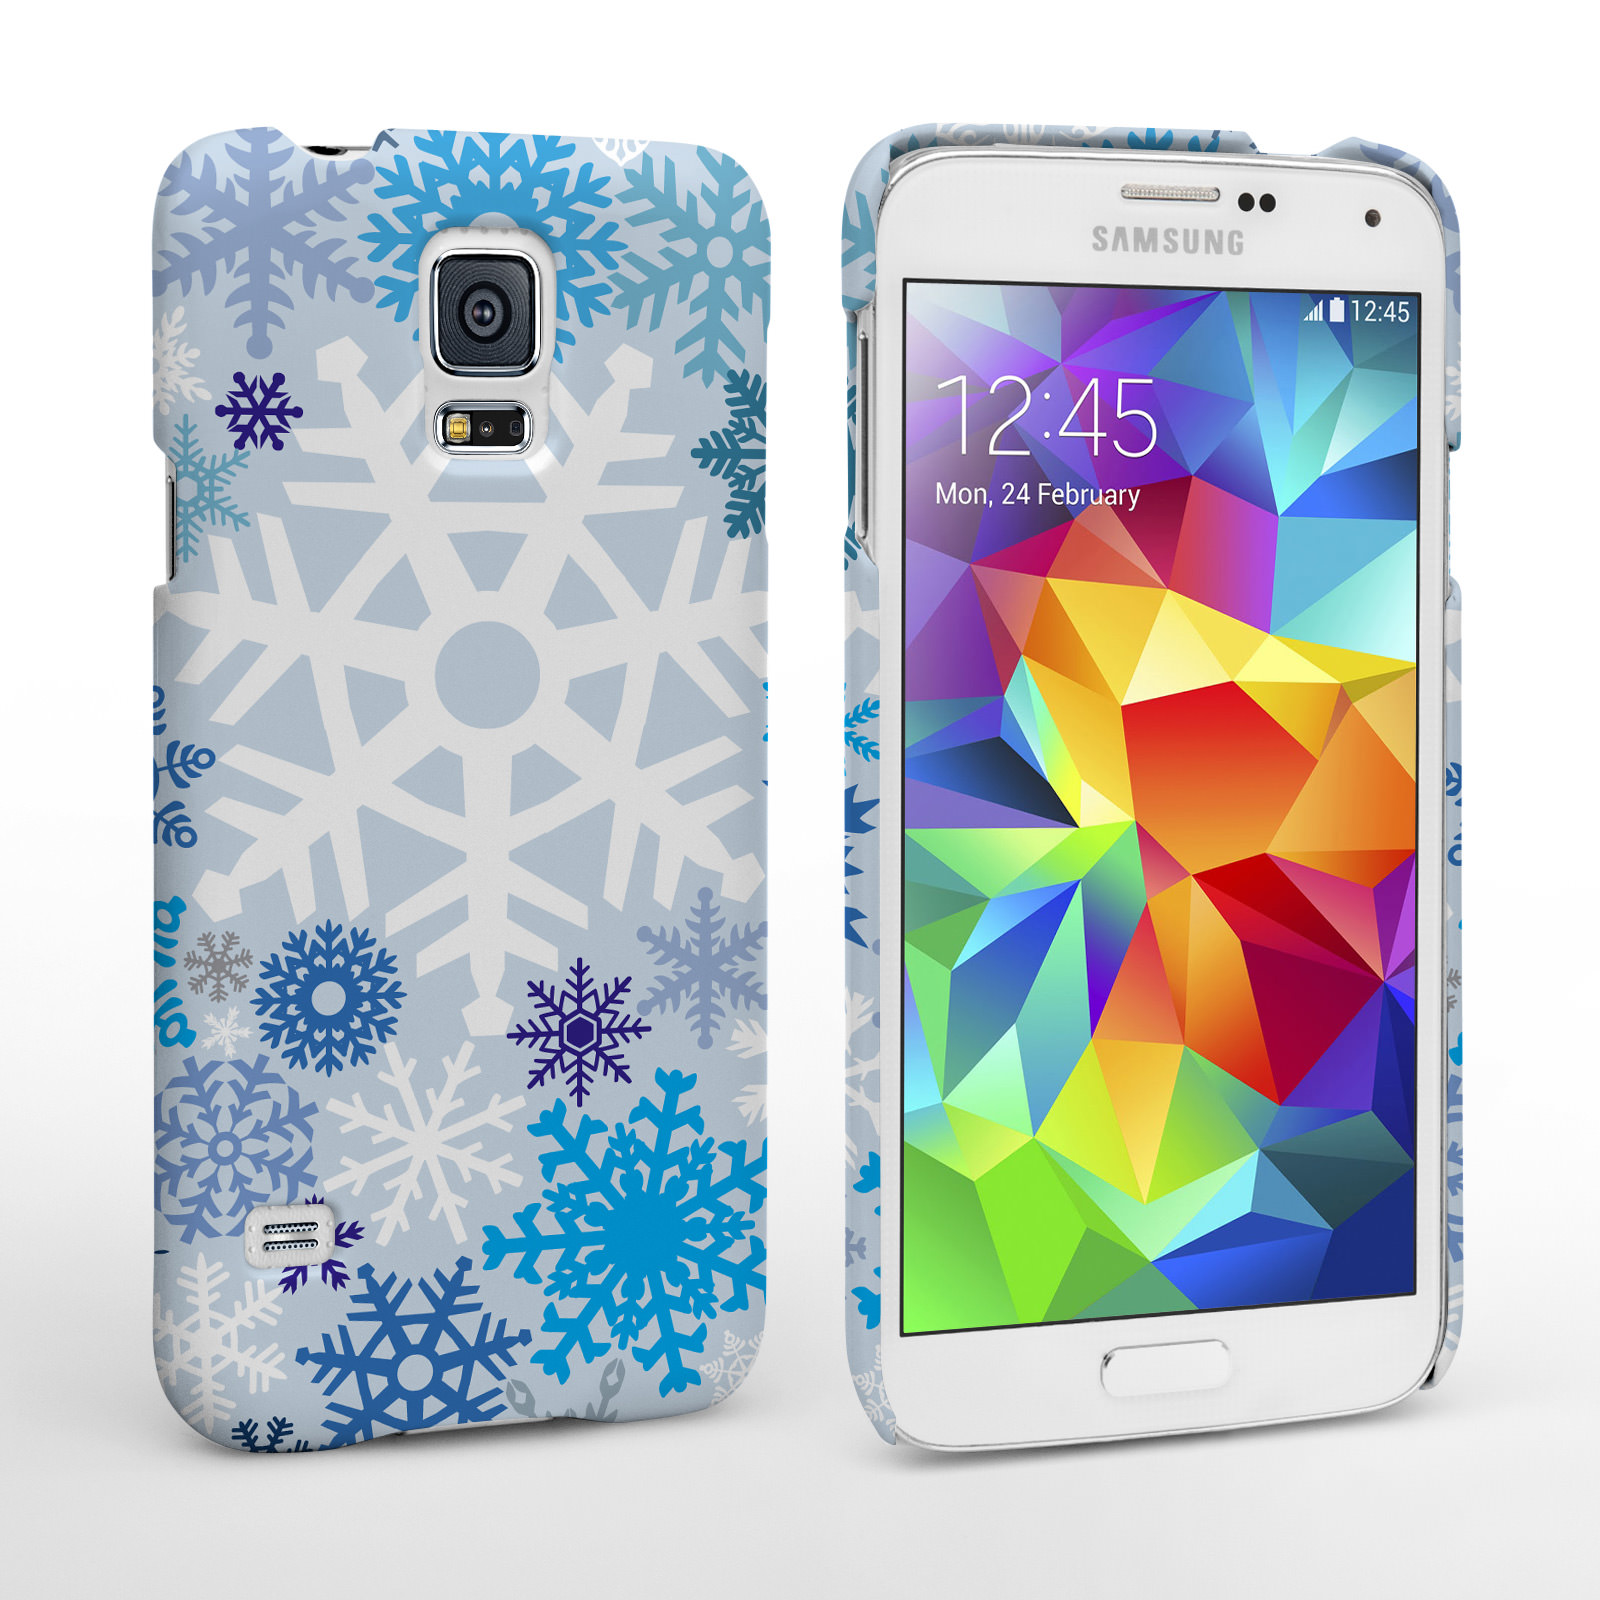 Caseflex Samsung Galaxy S5 Winter Christmas Snowflake Hard Case White / Blue